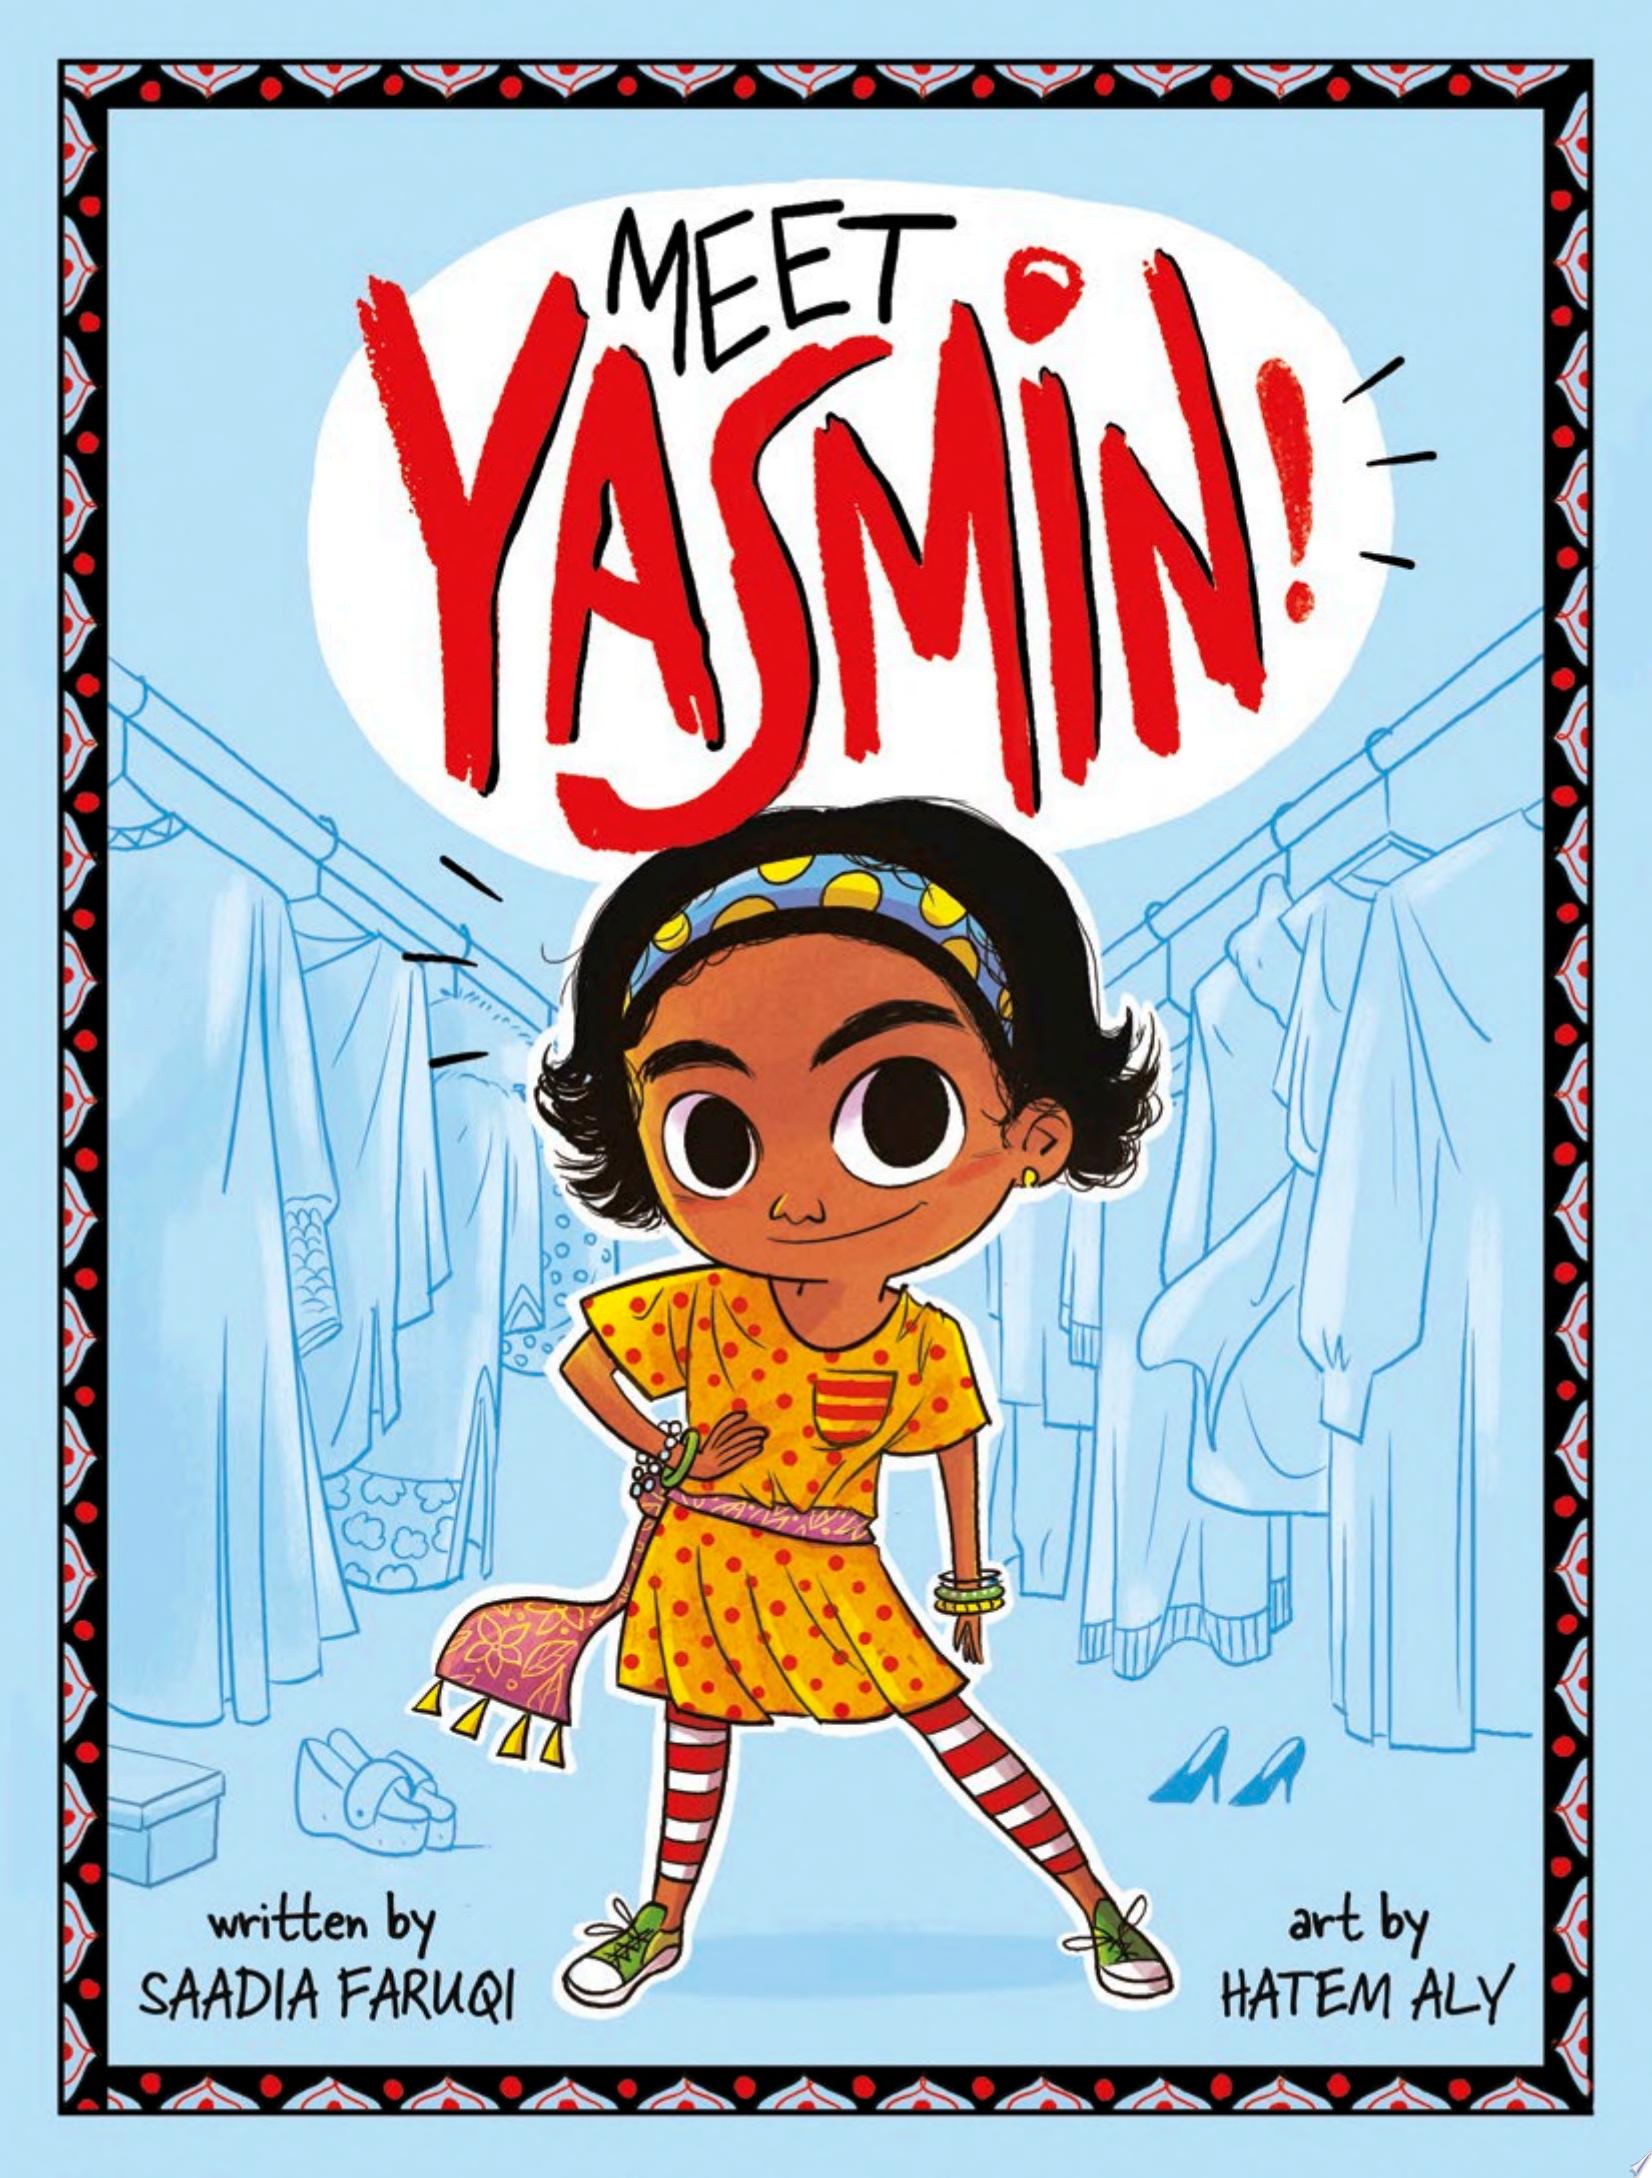 Image for "Meet Yasmin!"